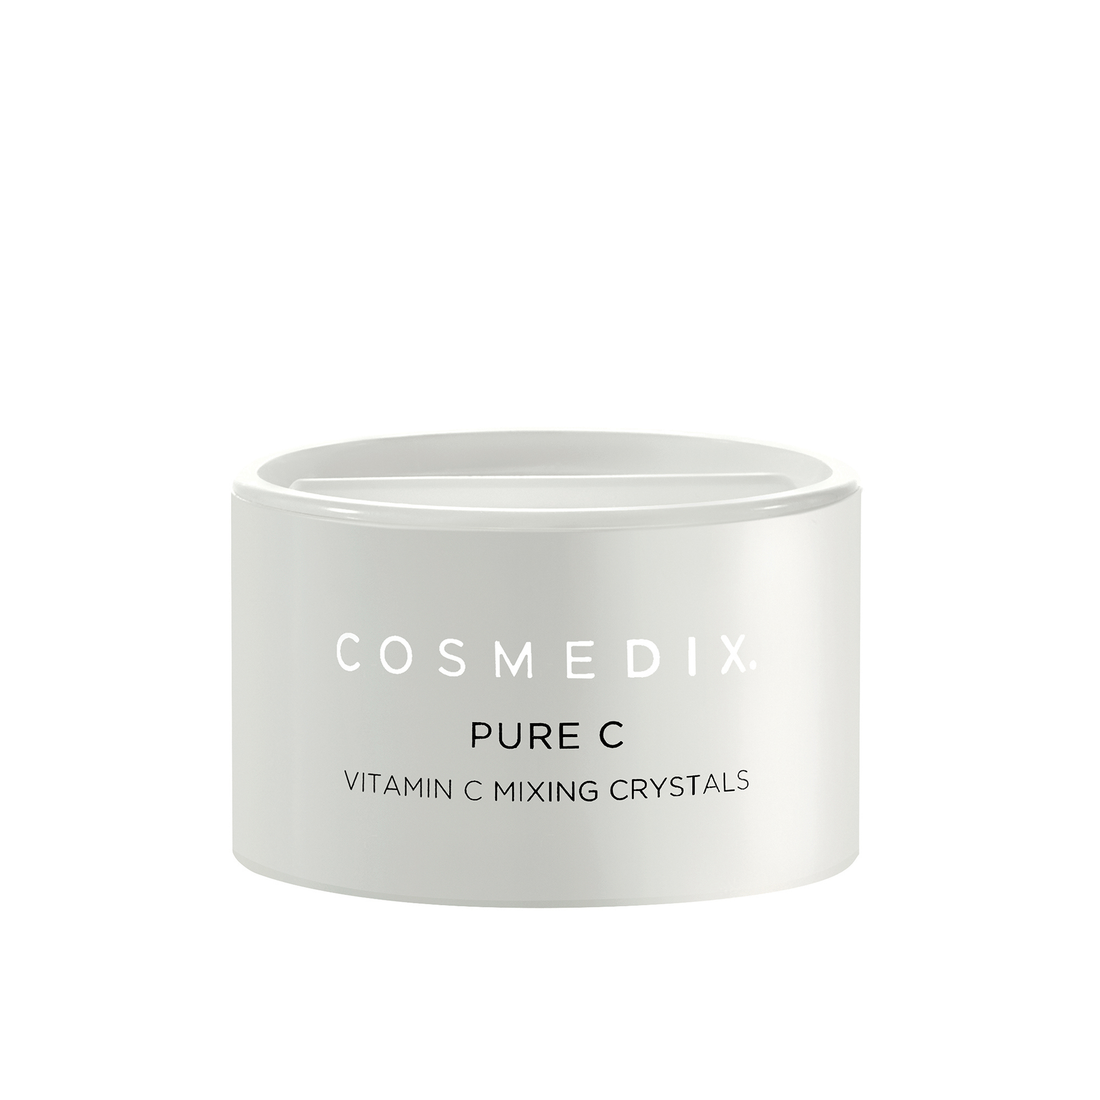 Cosmedix Pure C 60g